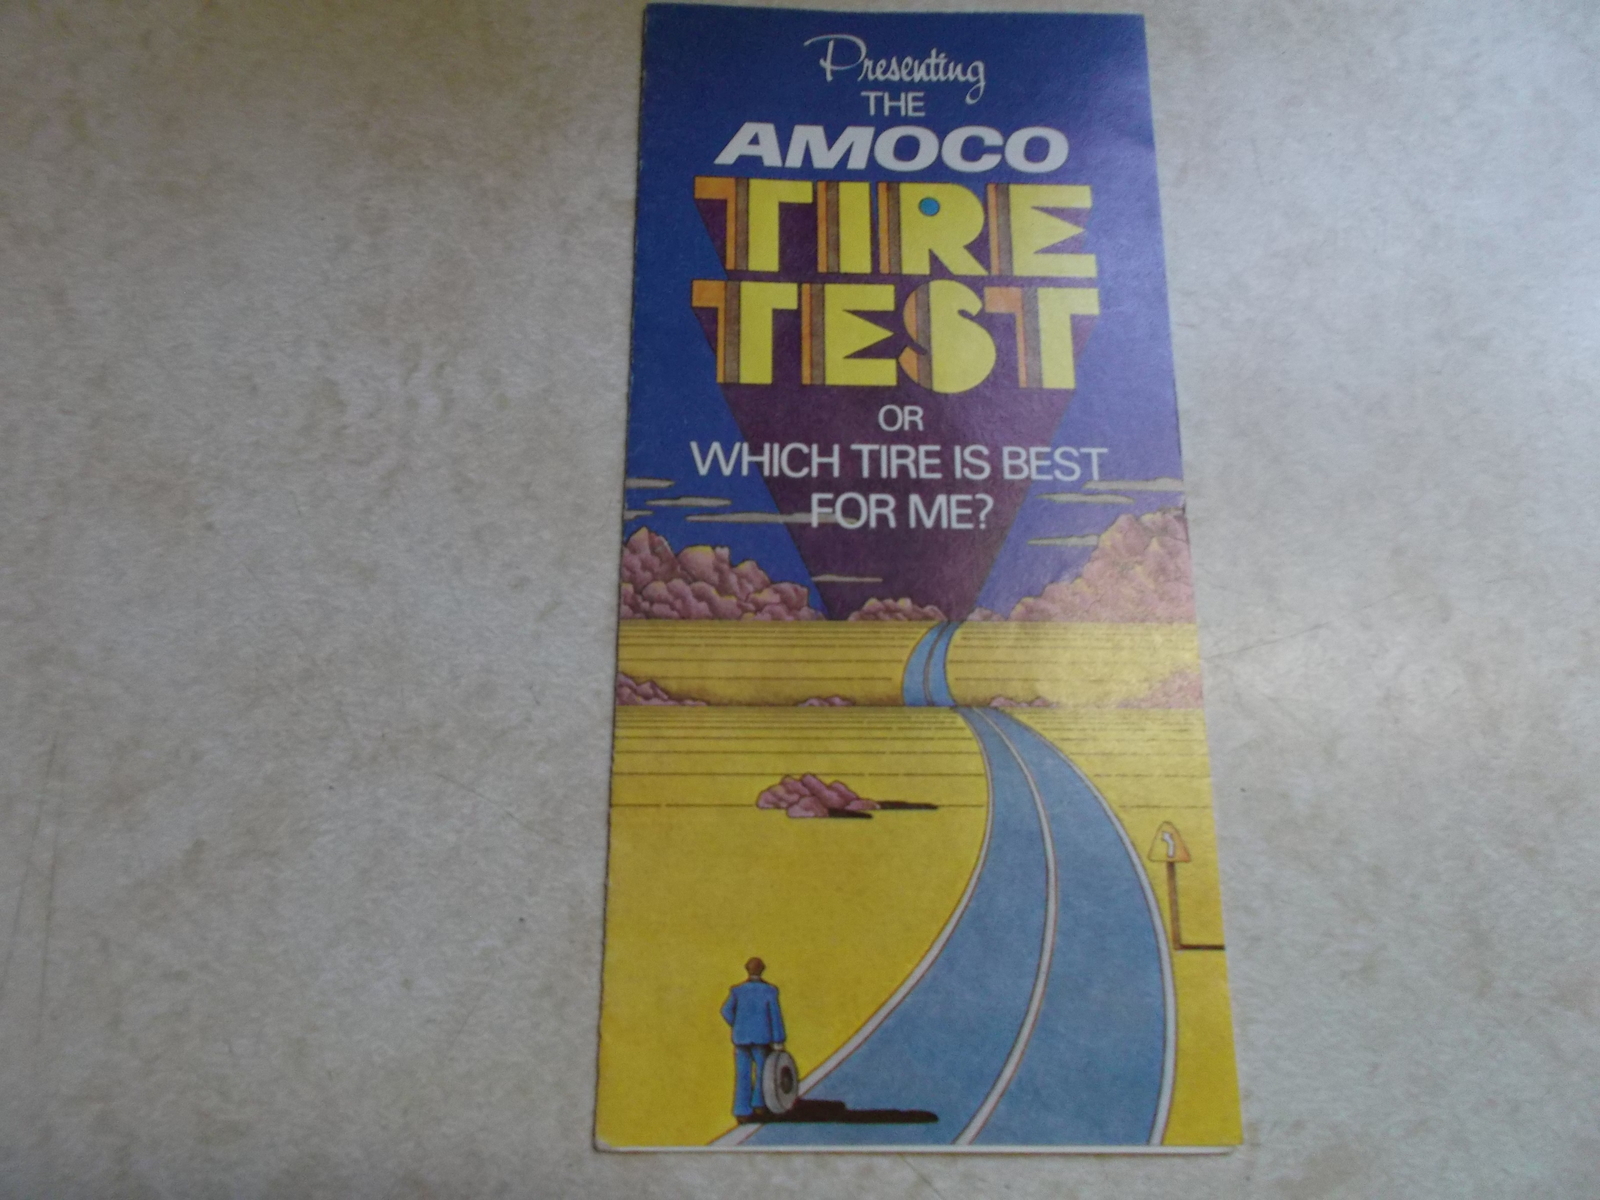 Original Amoco Tire Test Brochure  to Assist in Selecting Amoco/Atlas Tires - $8.00